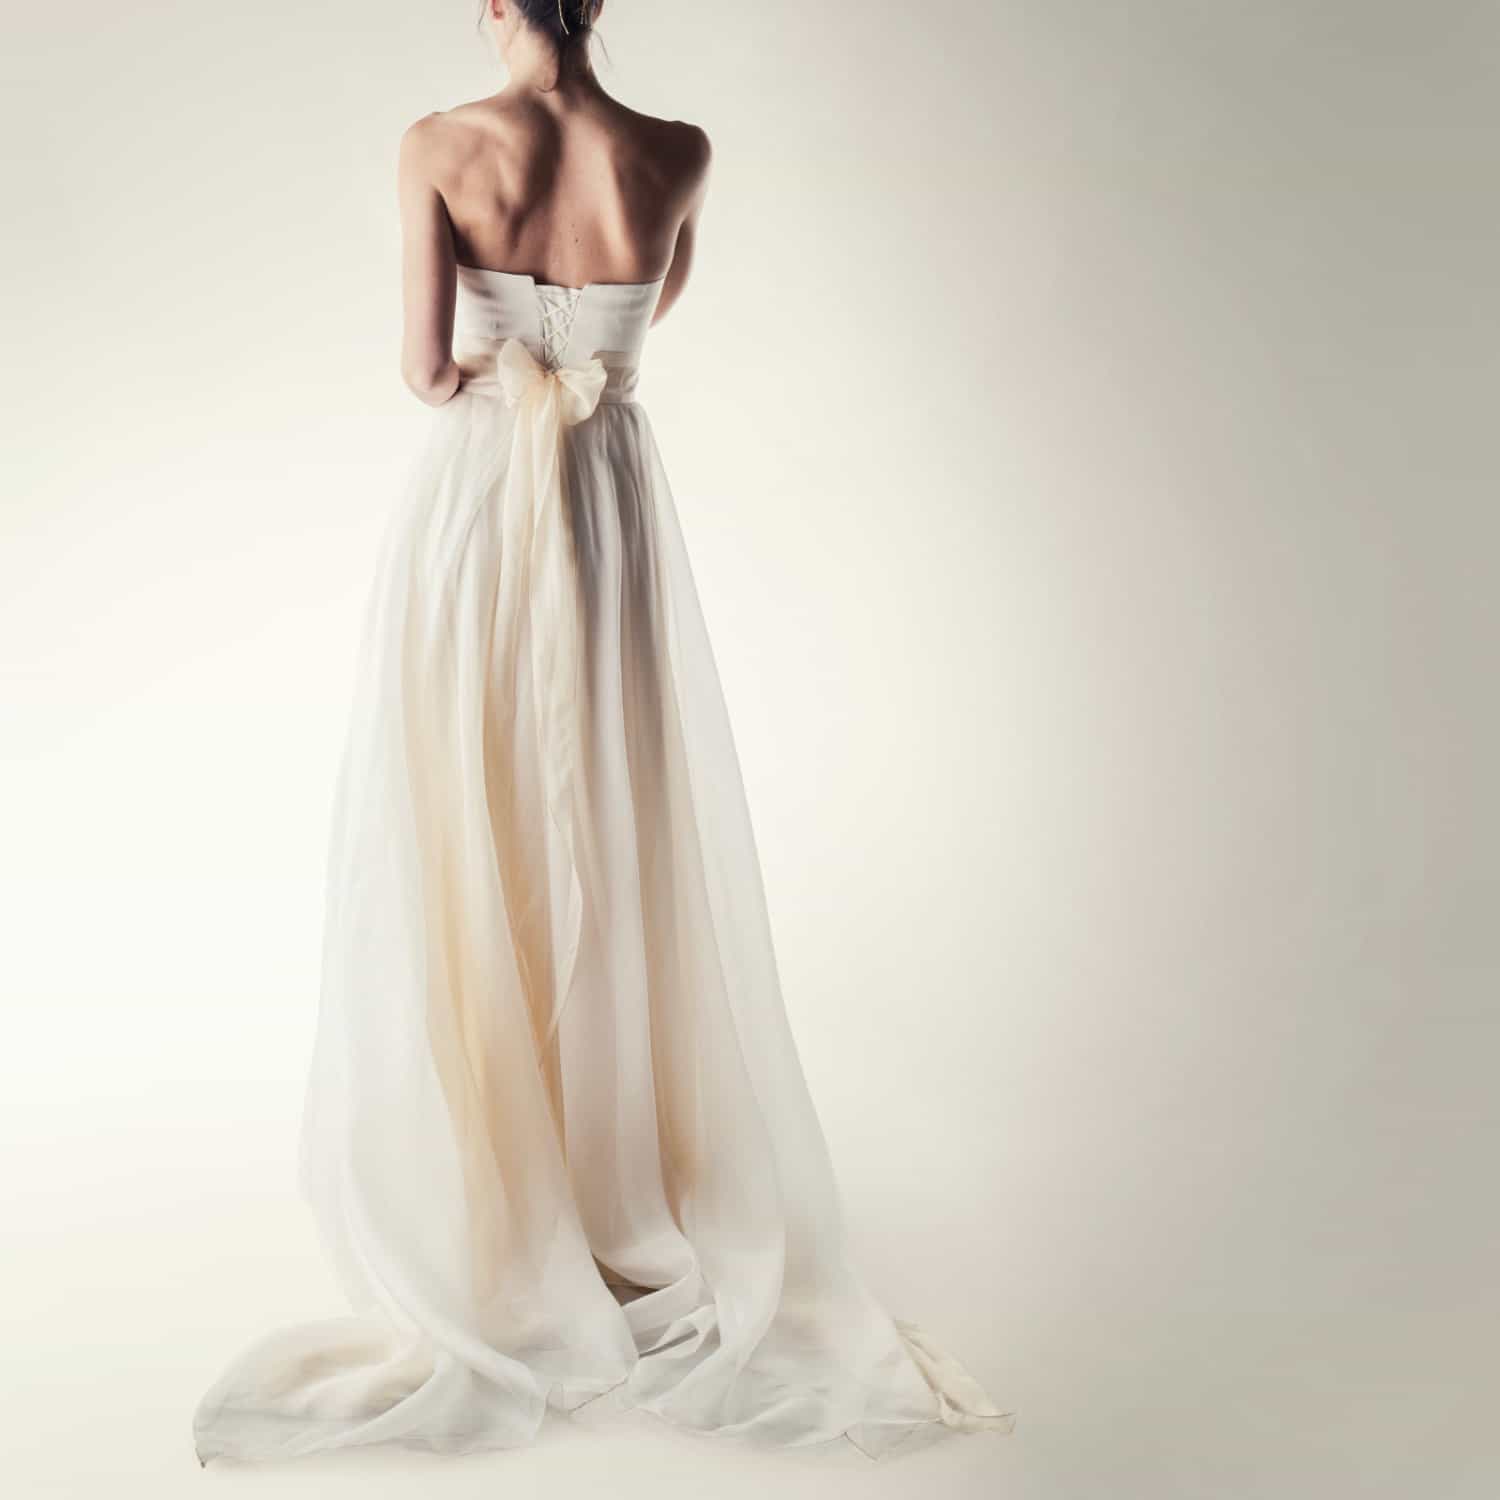 bridal corset for wedding dress